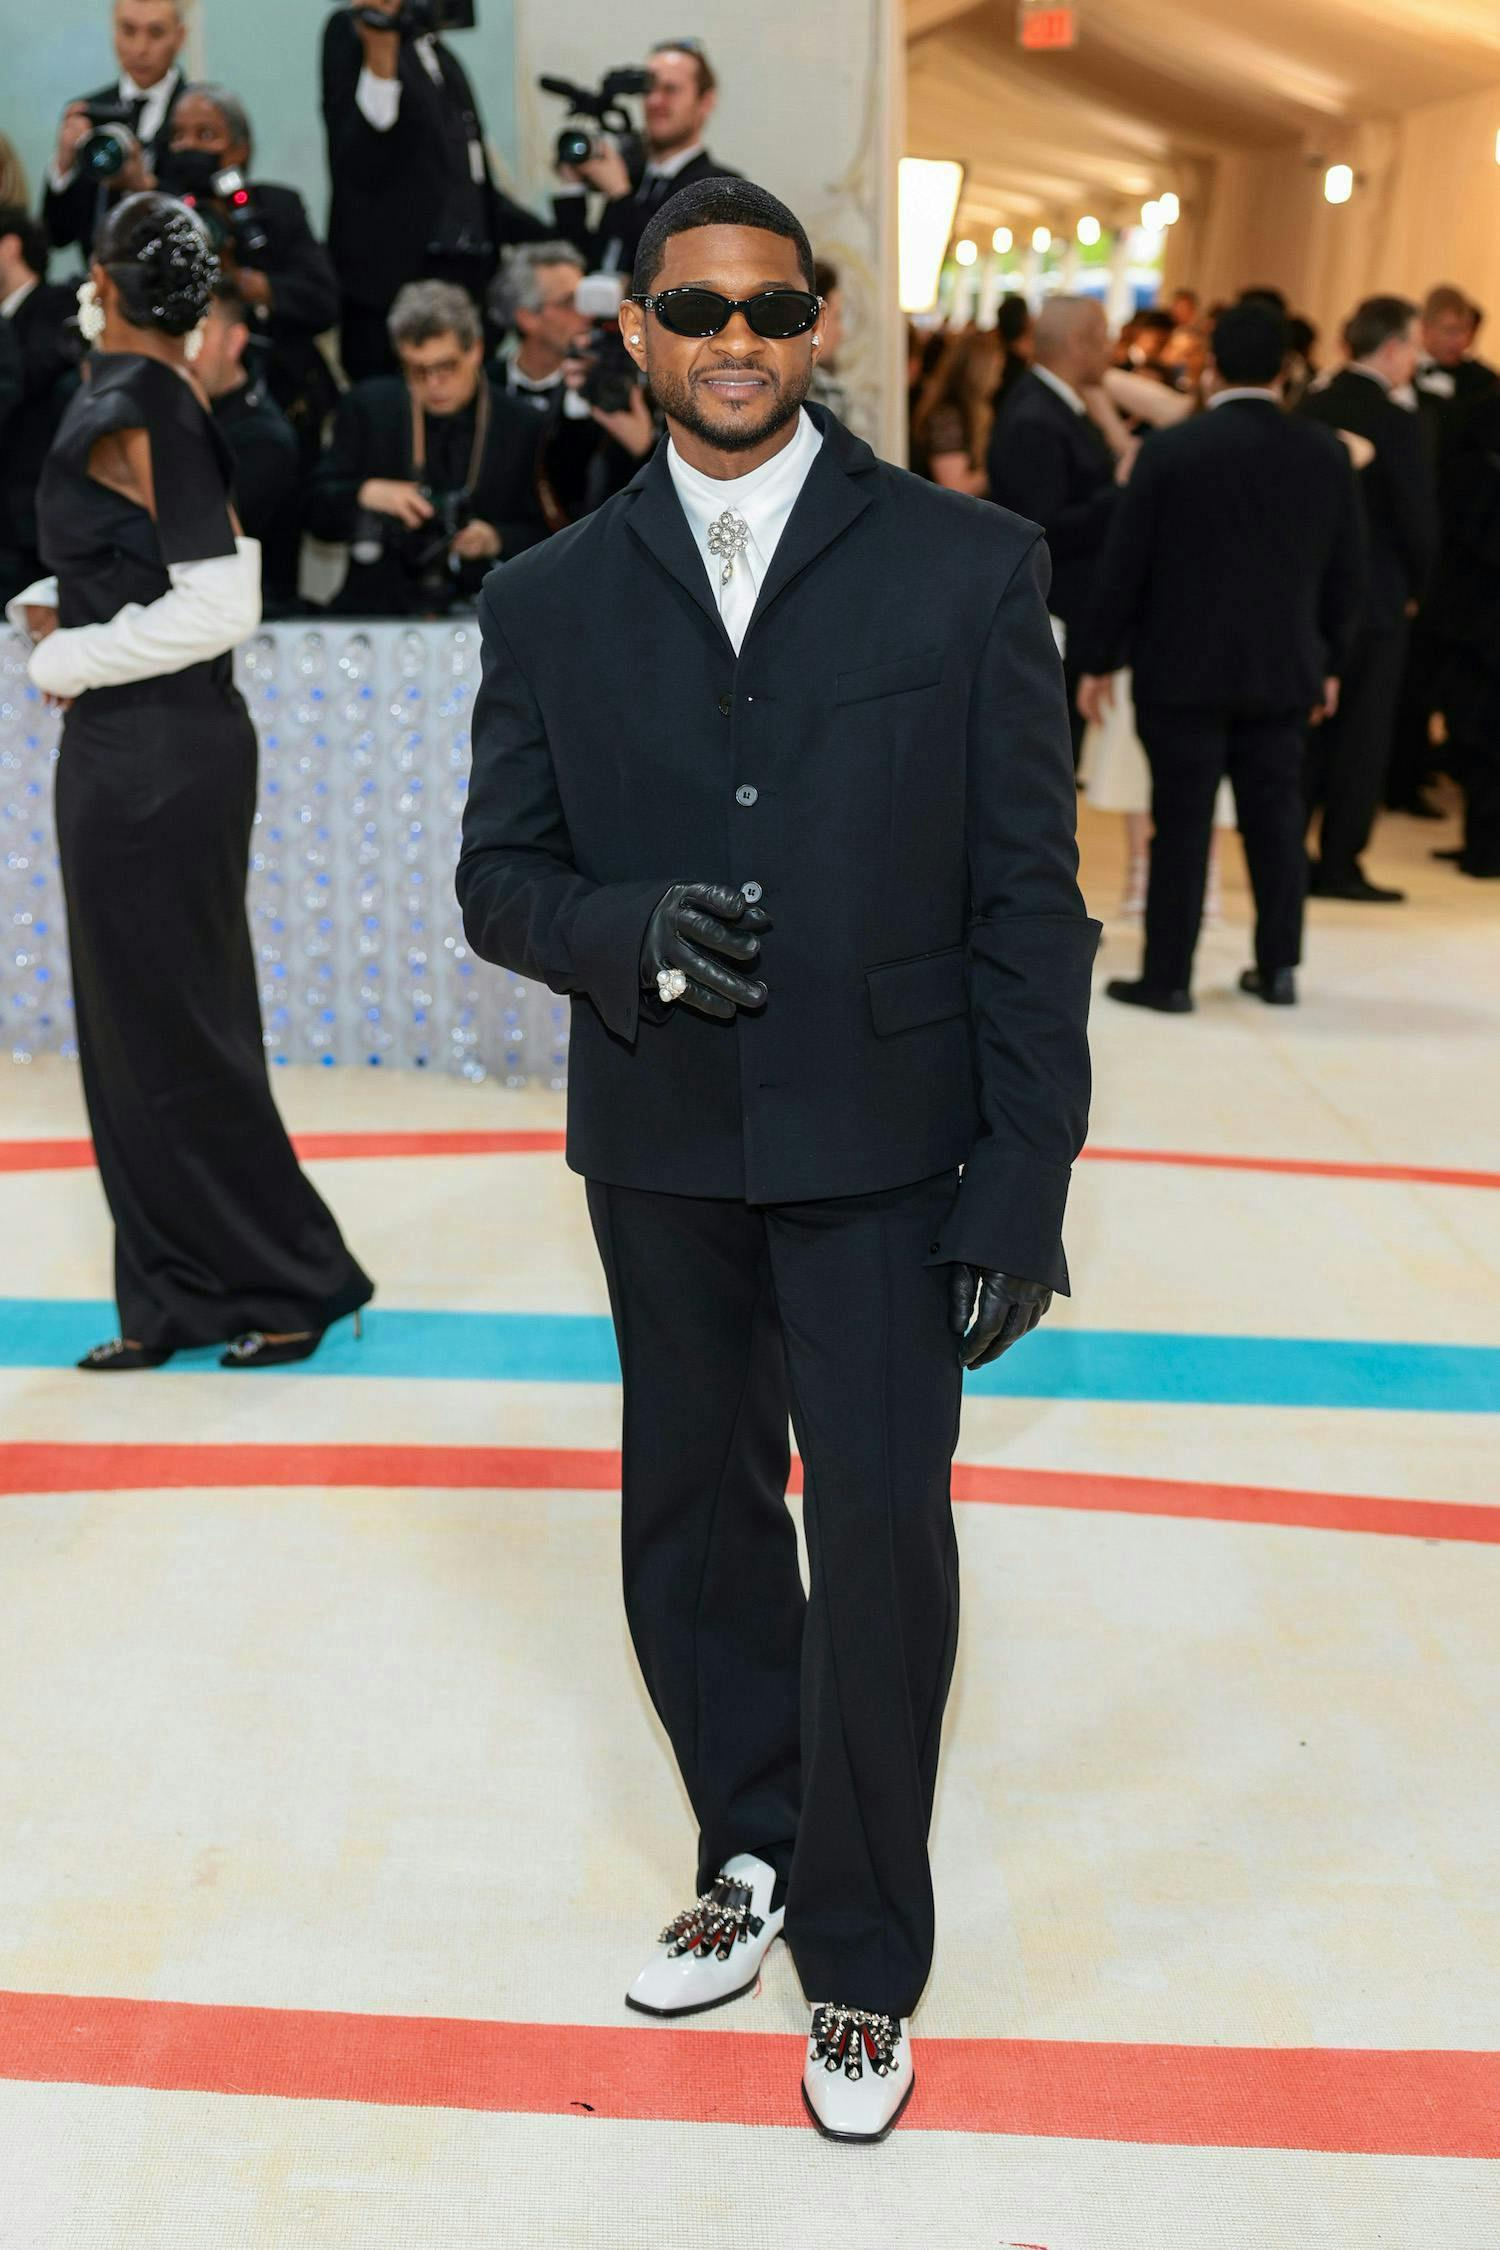 suit glove person standing adult male man shoe fashion coat